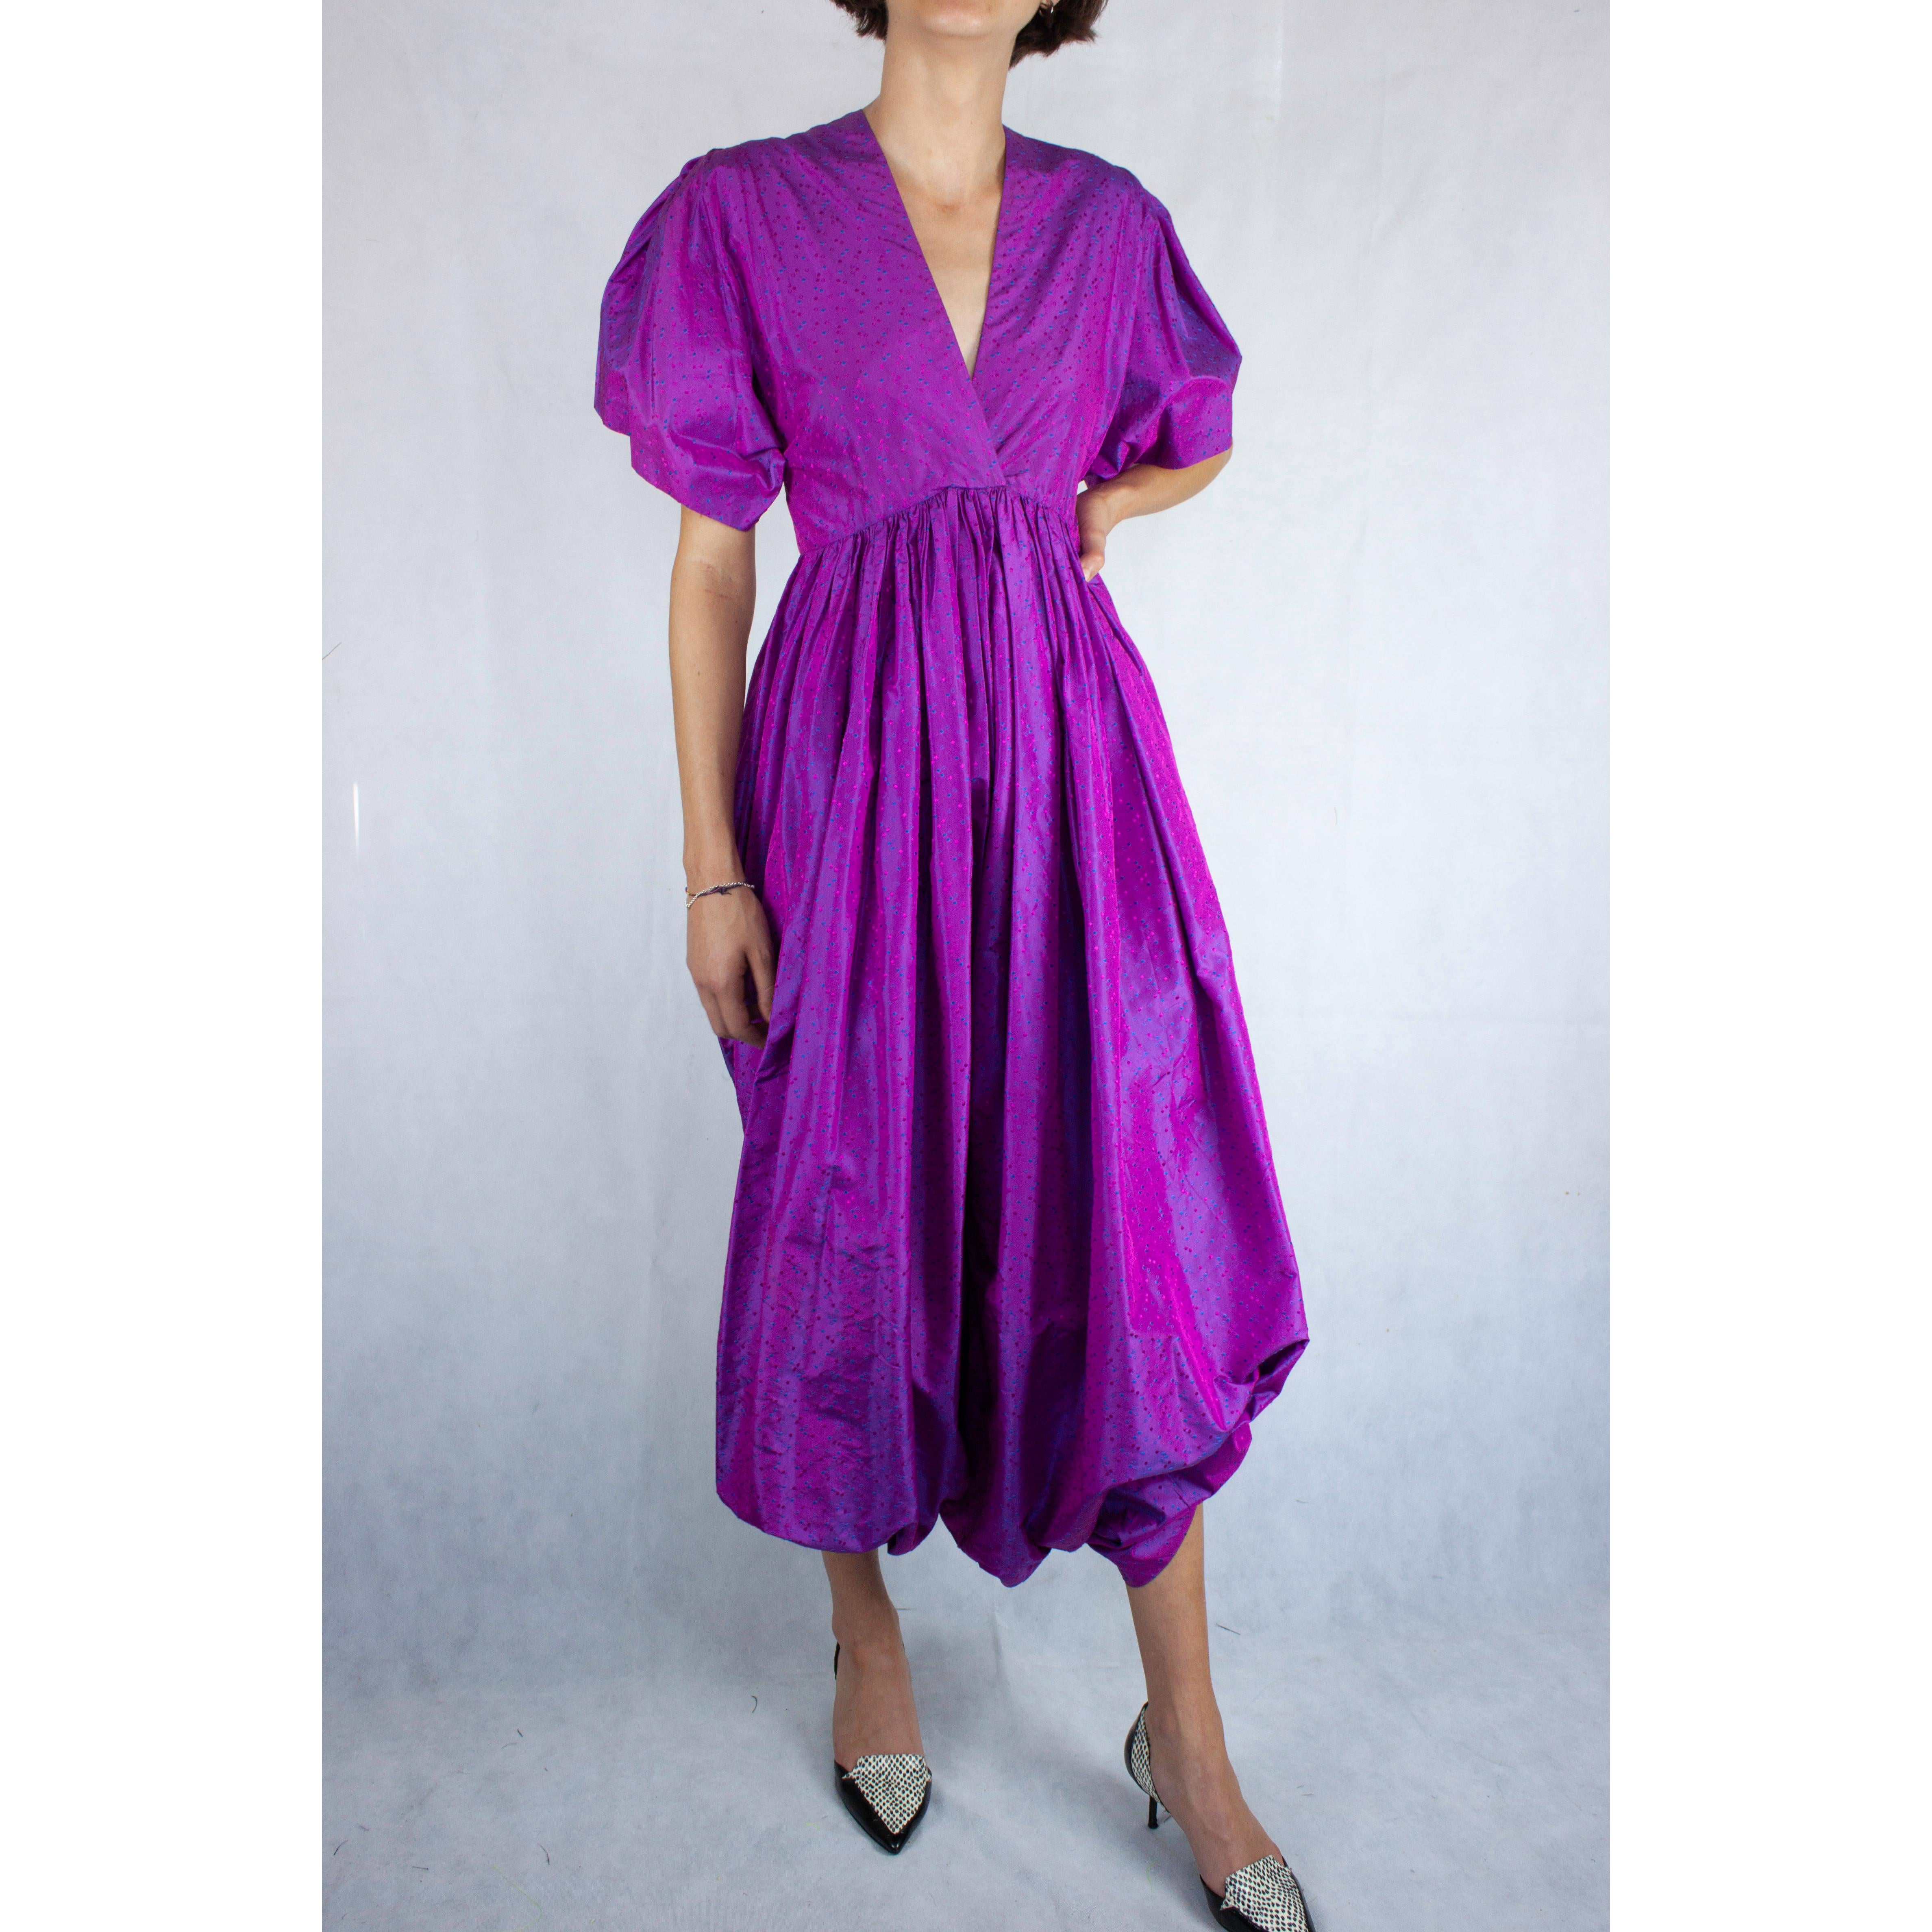 Unlabelled  Madame Grès iridescent lilac silk evening jumpsuit  circa 1970s For Sale 2